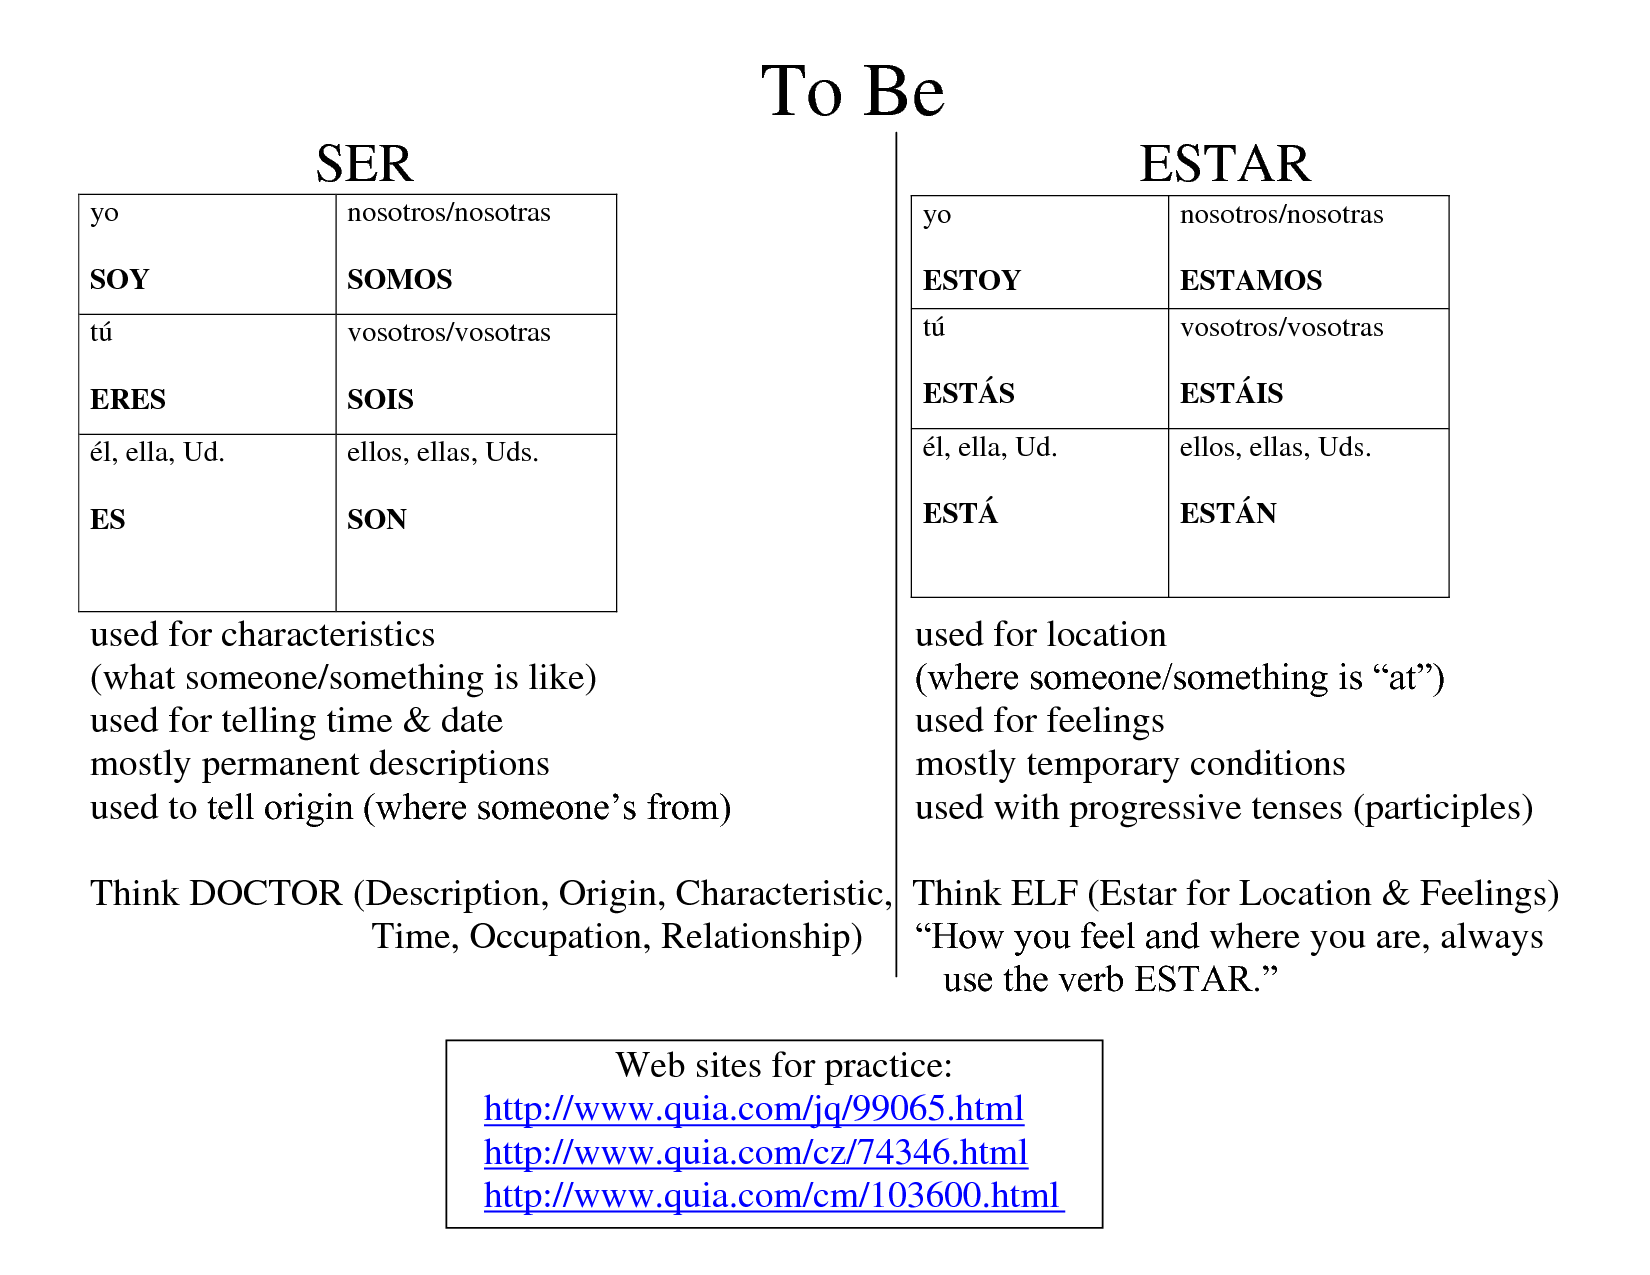 13-best-images-of-ser-vs-estar-printable-worksheets-spanish-ser-and-estar-chart-ser-and-estar